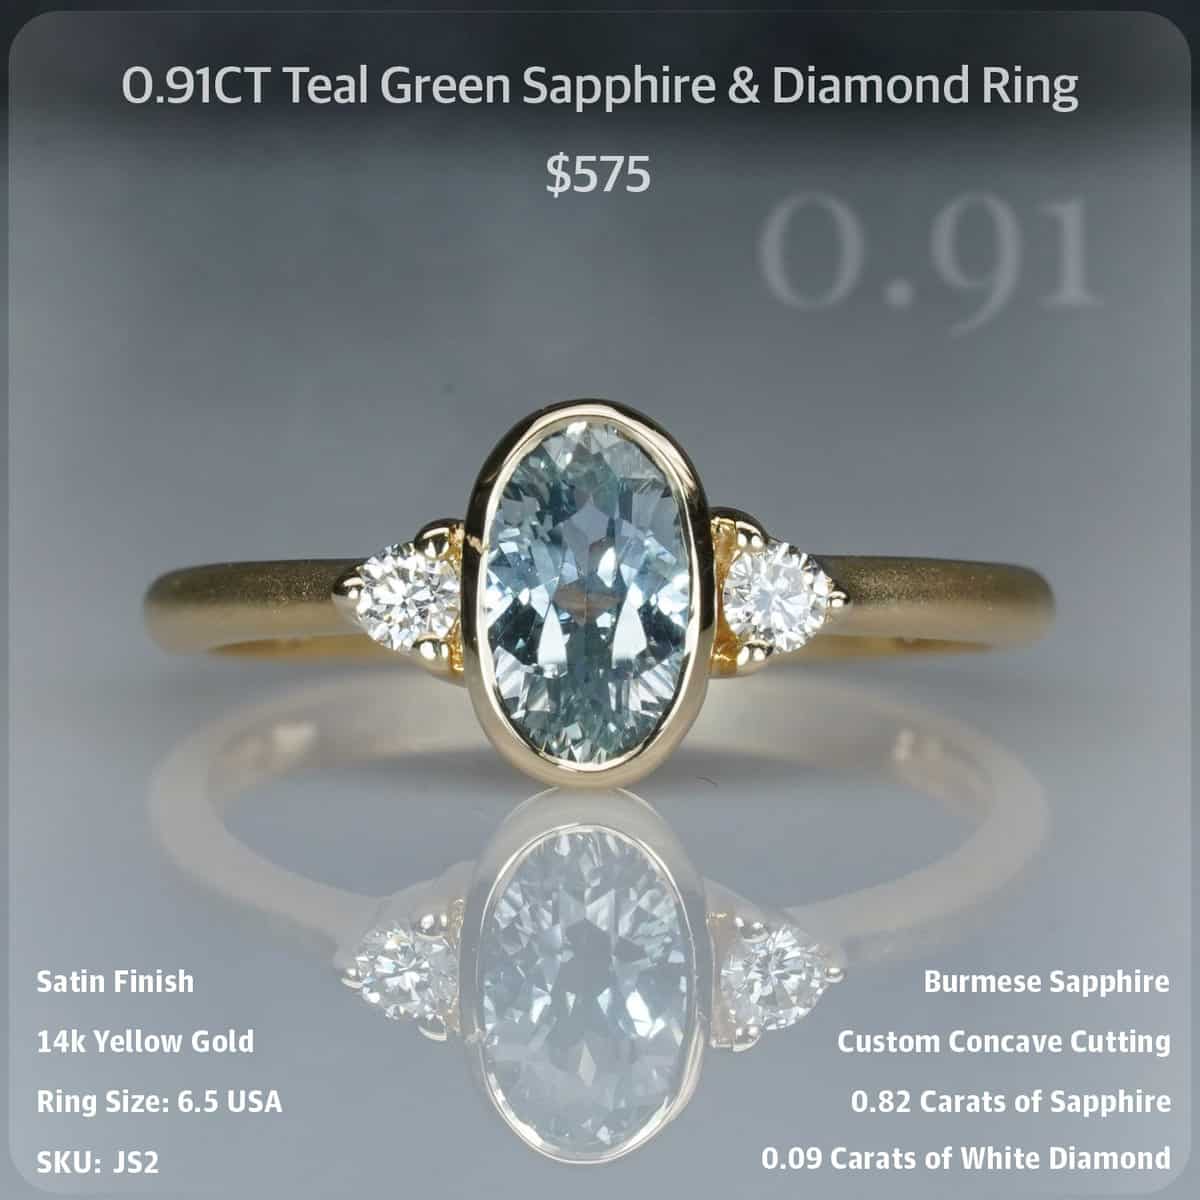 0.91CT Teal Green Sapphire & Diamond Ring